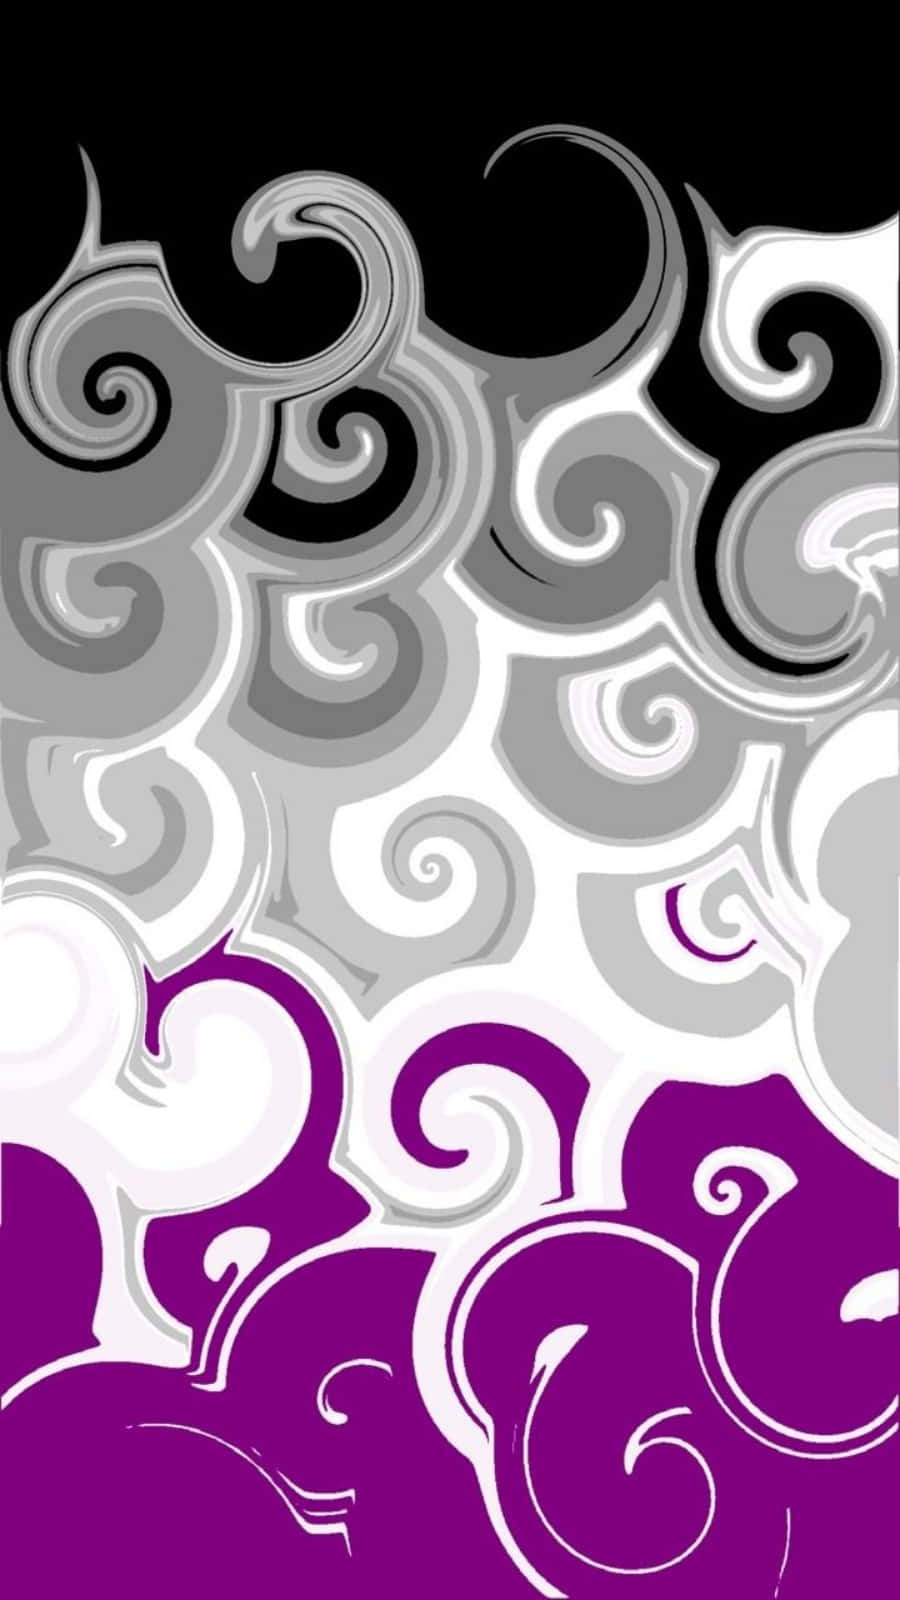 Purple And Black Swirls On A Black Background Wallpaper